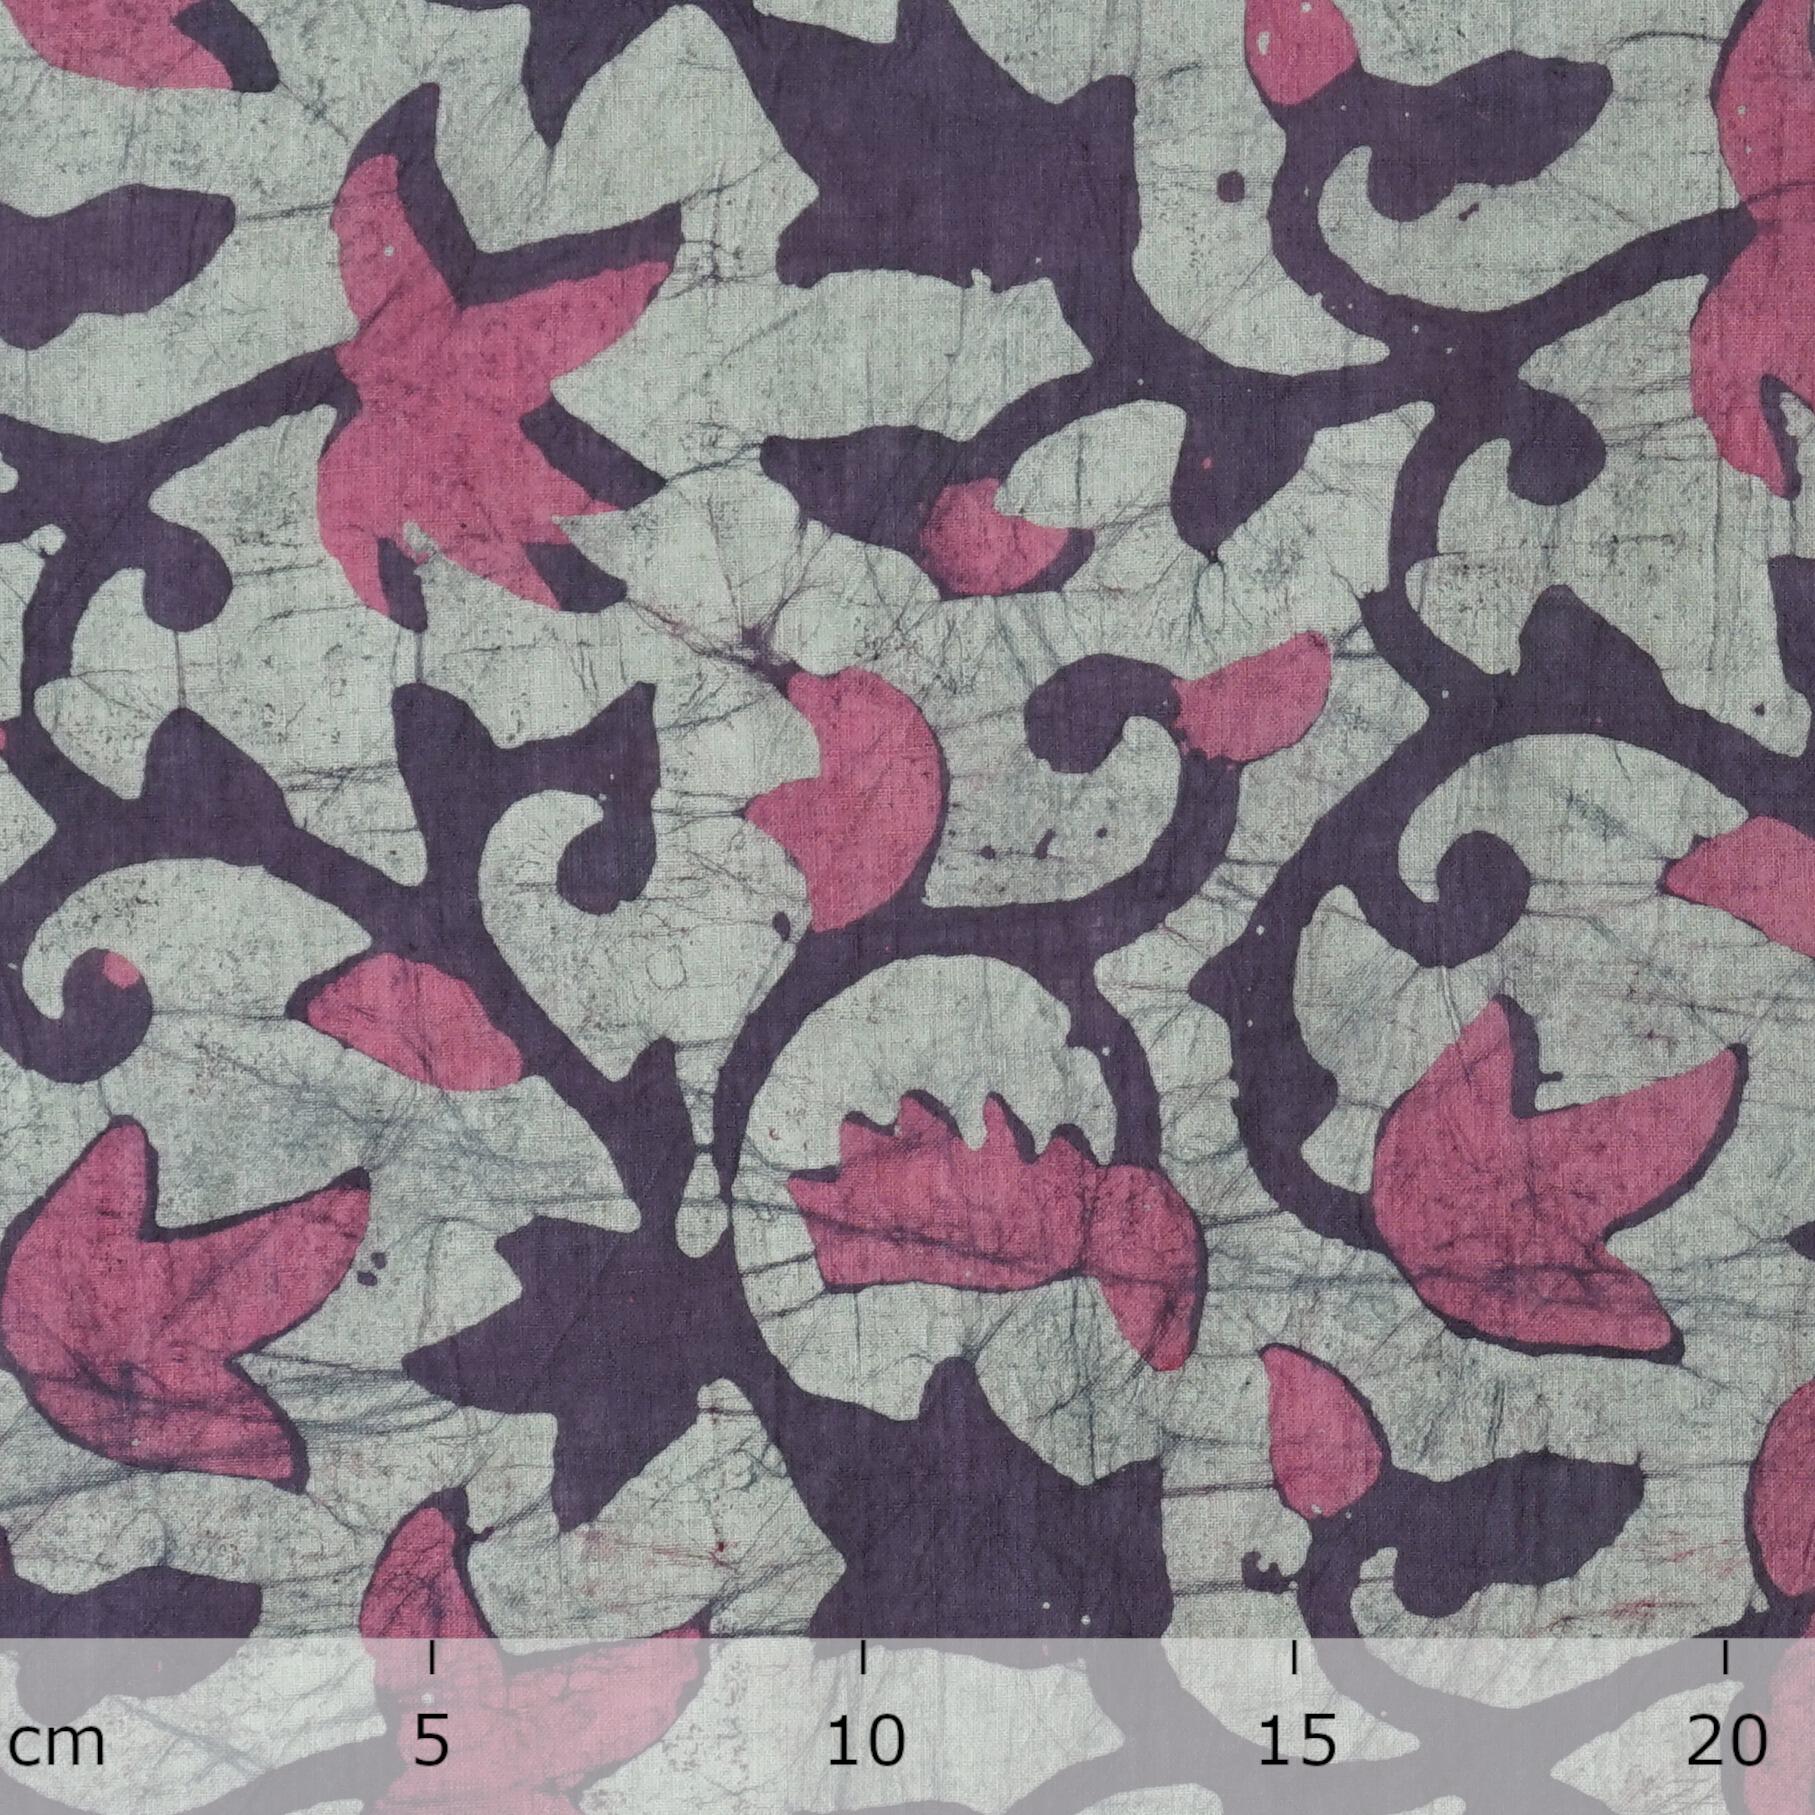 100% Block-Printed Batik Cotton Fabric From India - Fretwork Motif - Ruler